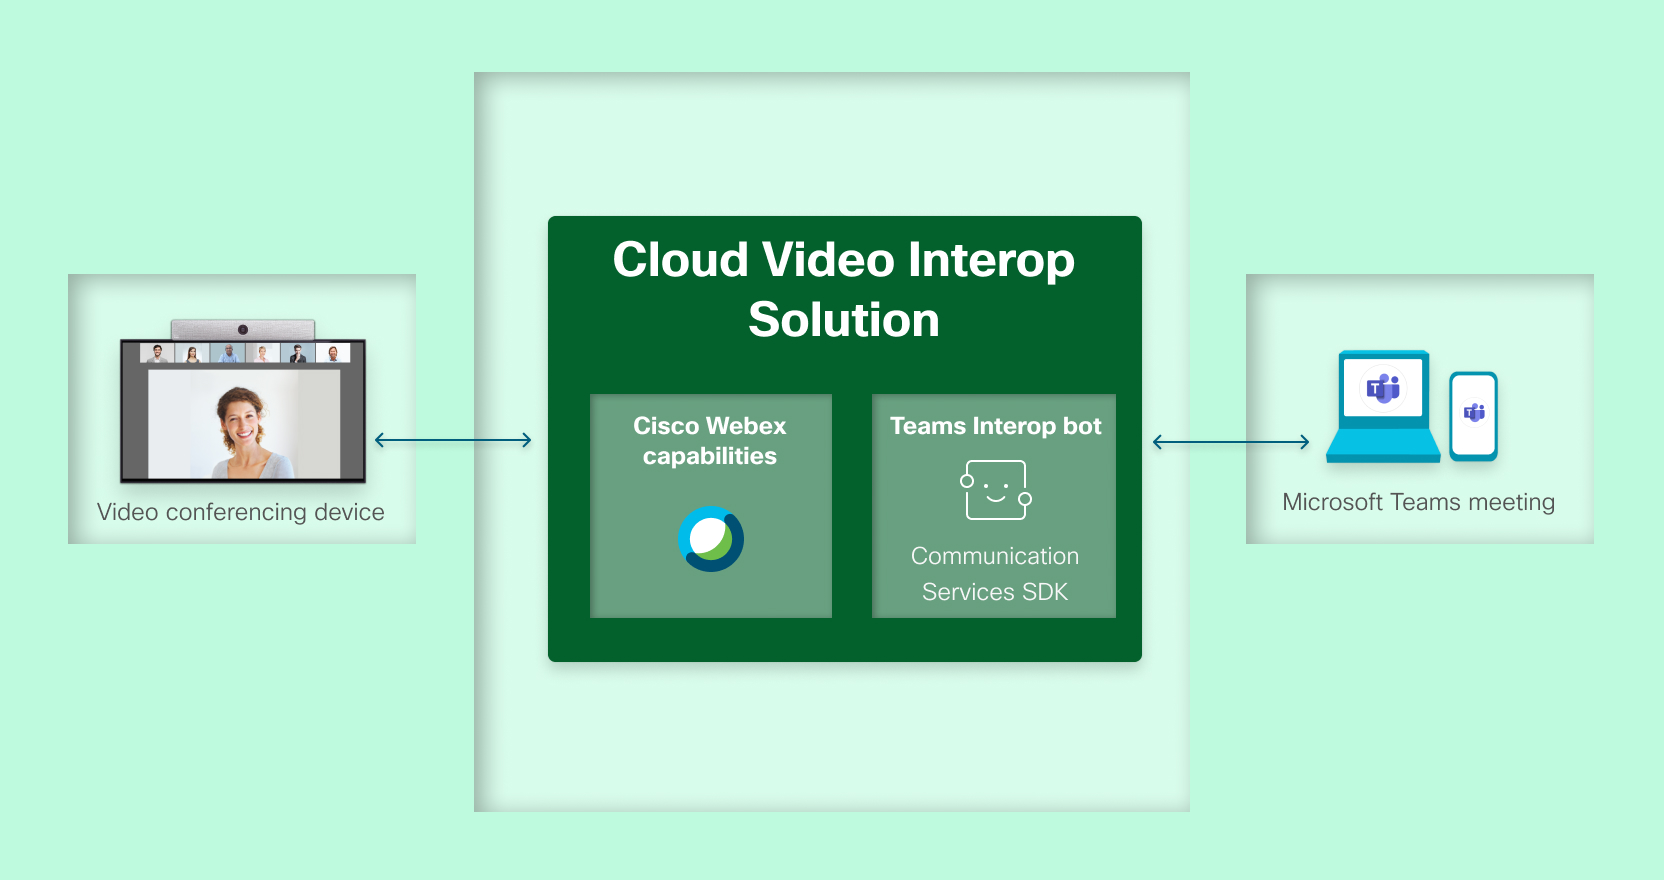 CVI Architecture image based on https://docs.microsoft.com/en-us/microsoftteams/cloud-video-interop